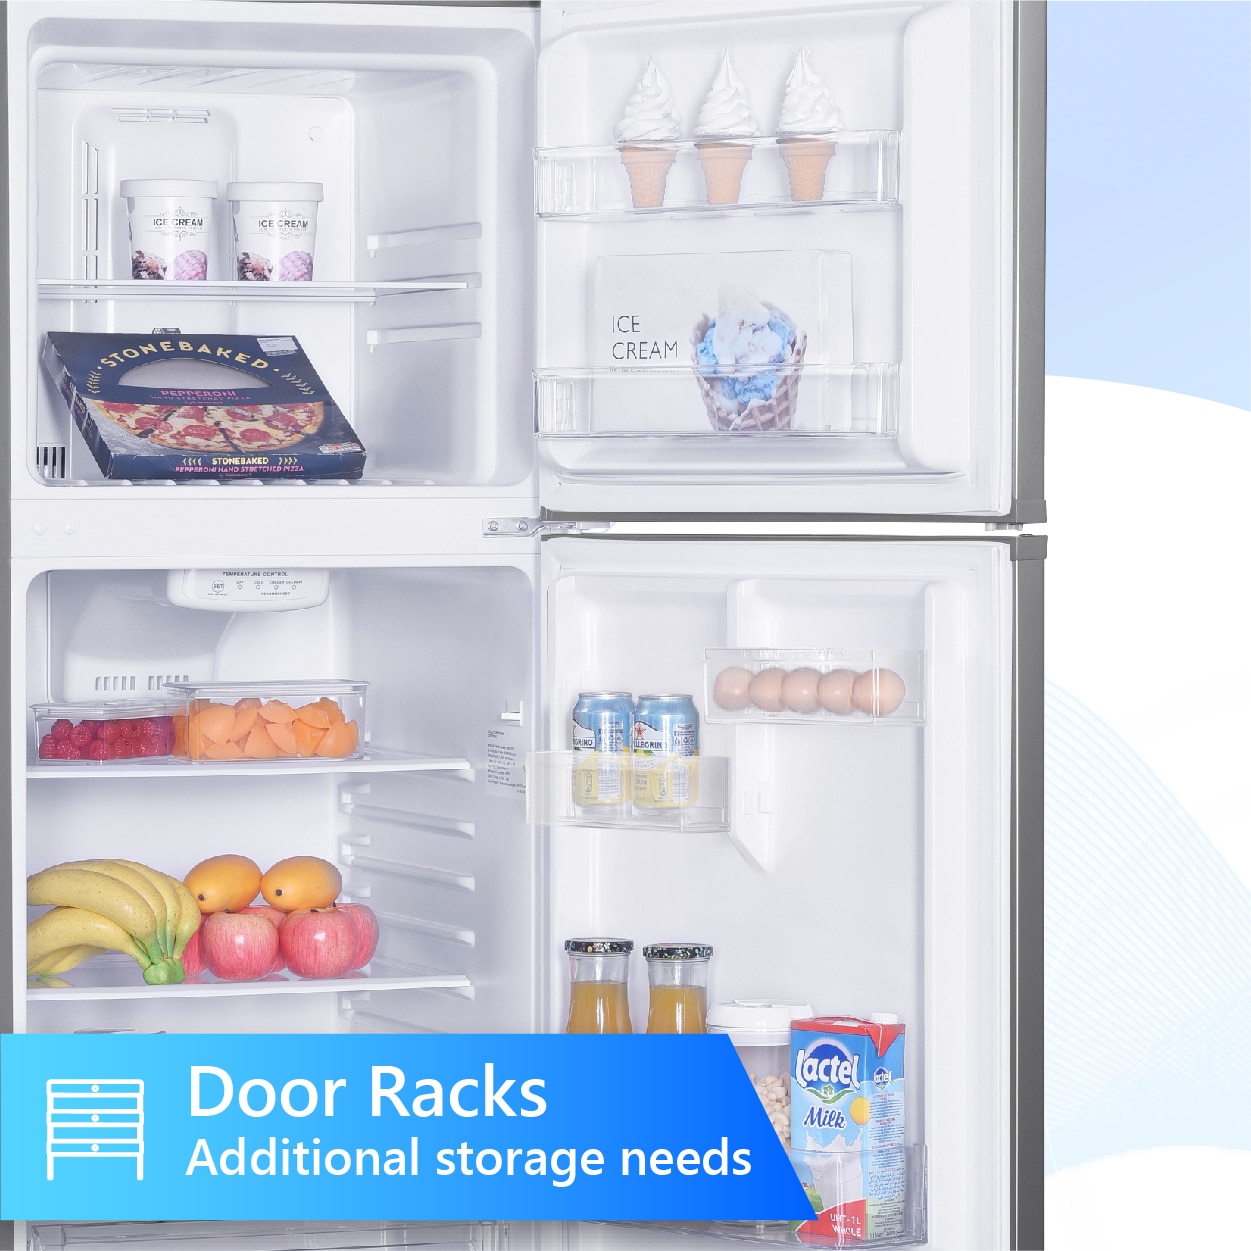 ConServ 10.1-cu ft Top-Freezer Refrigerator (Stainless Steel